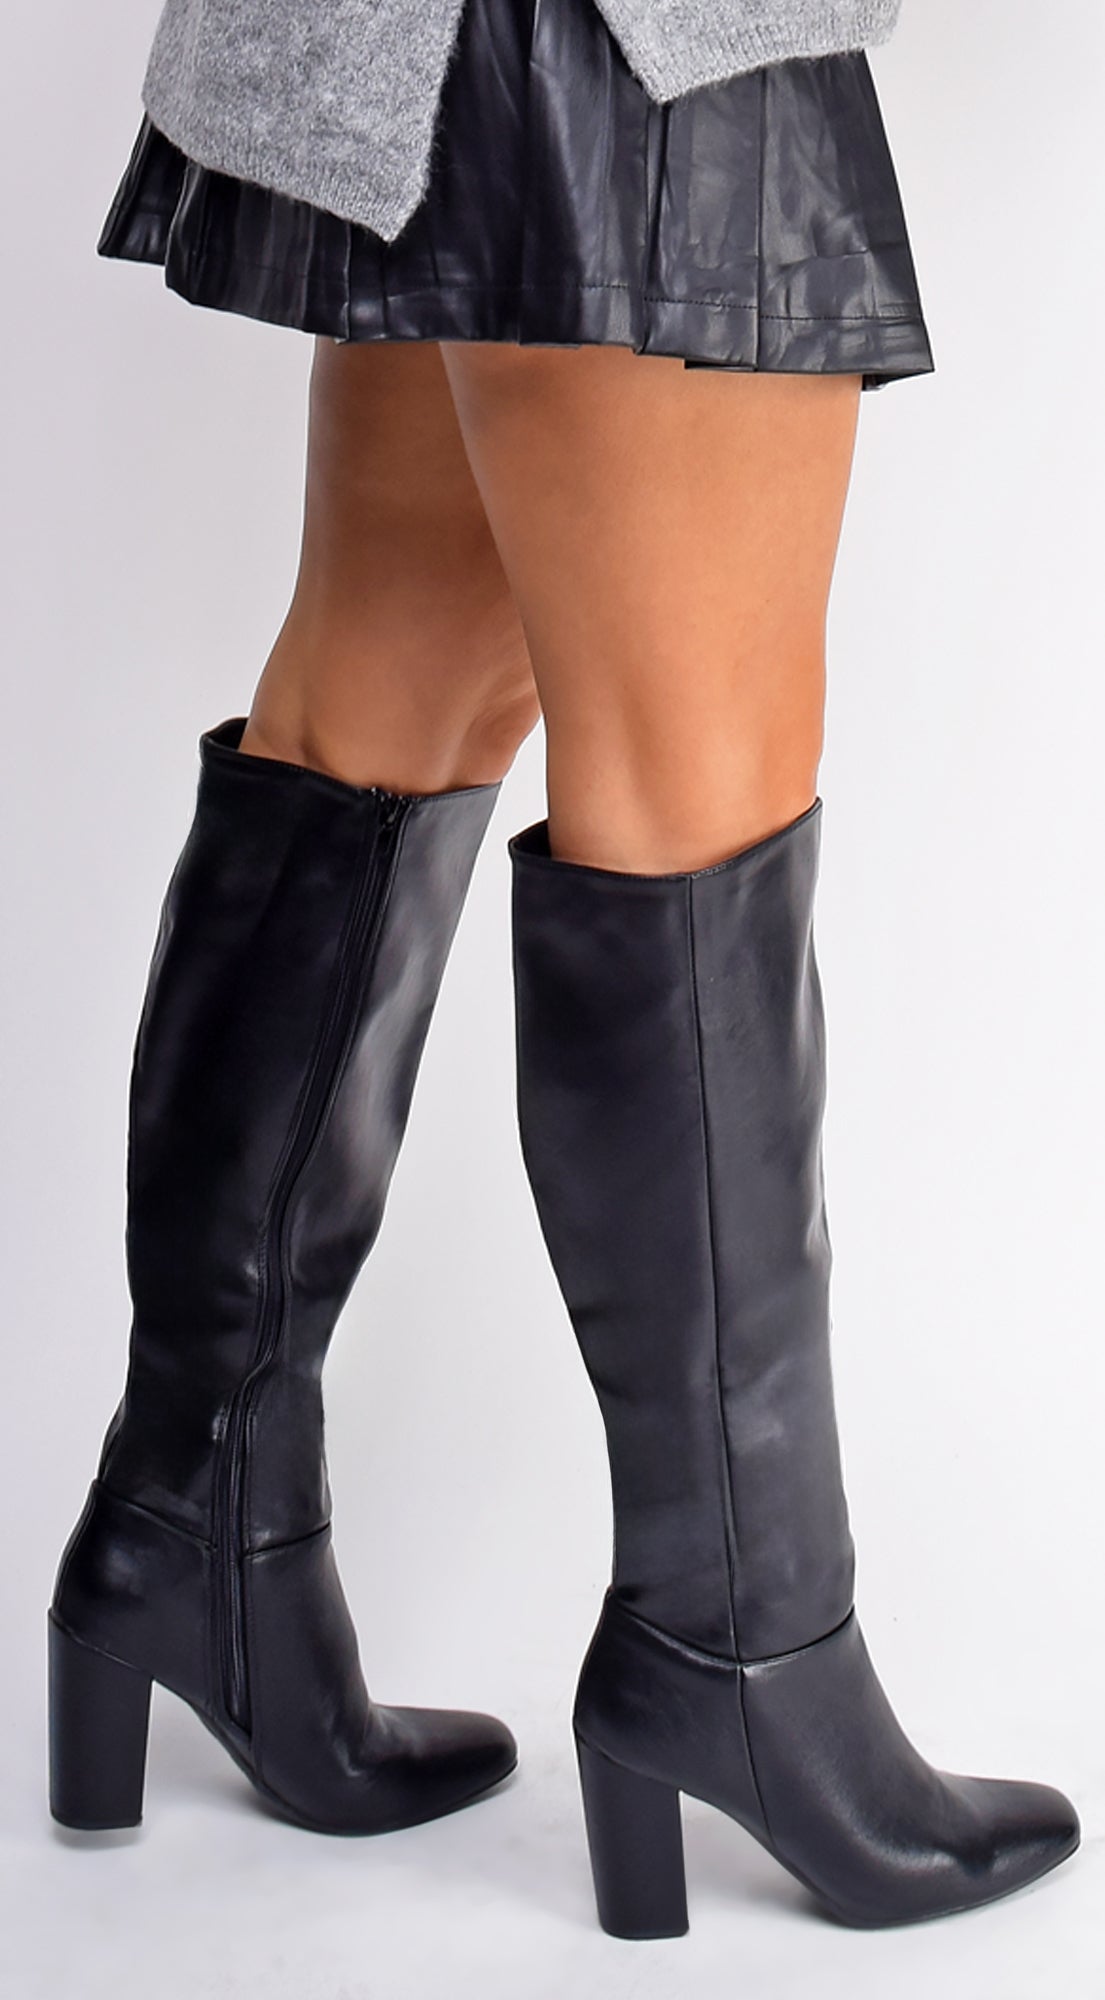 Verona Black Knee High Boots